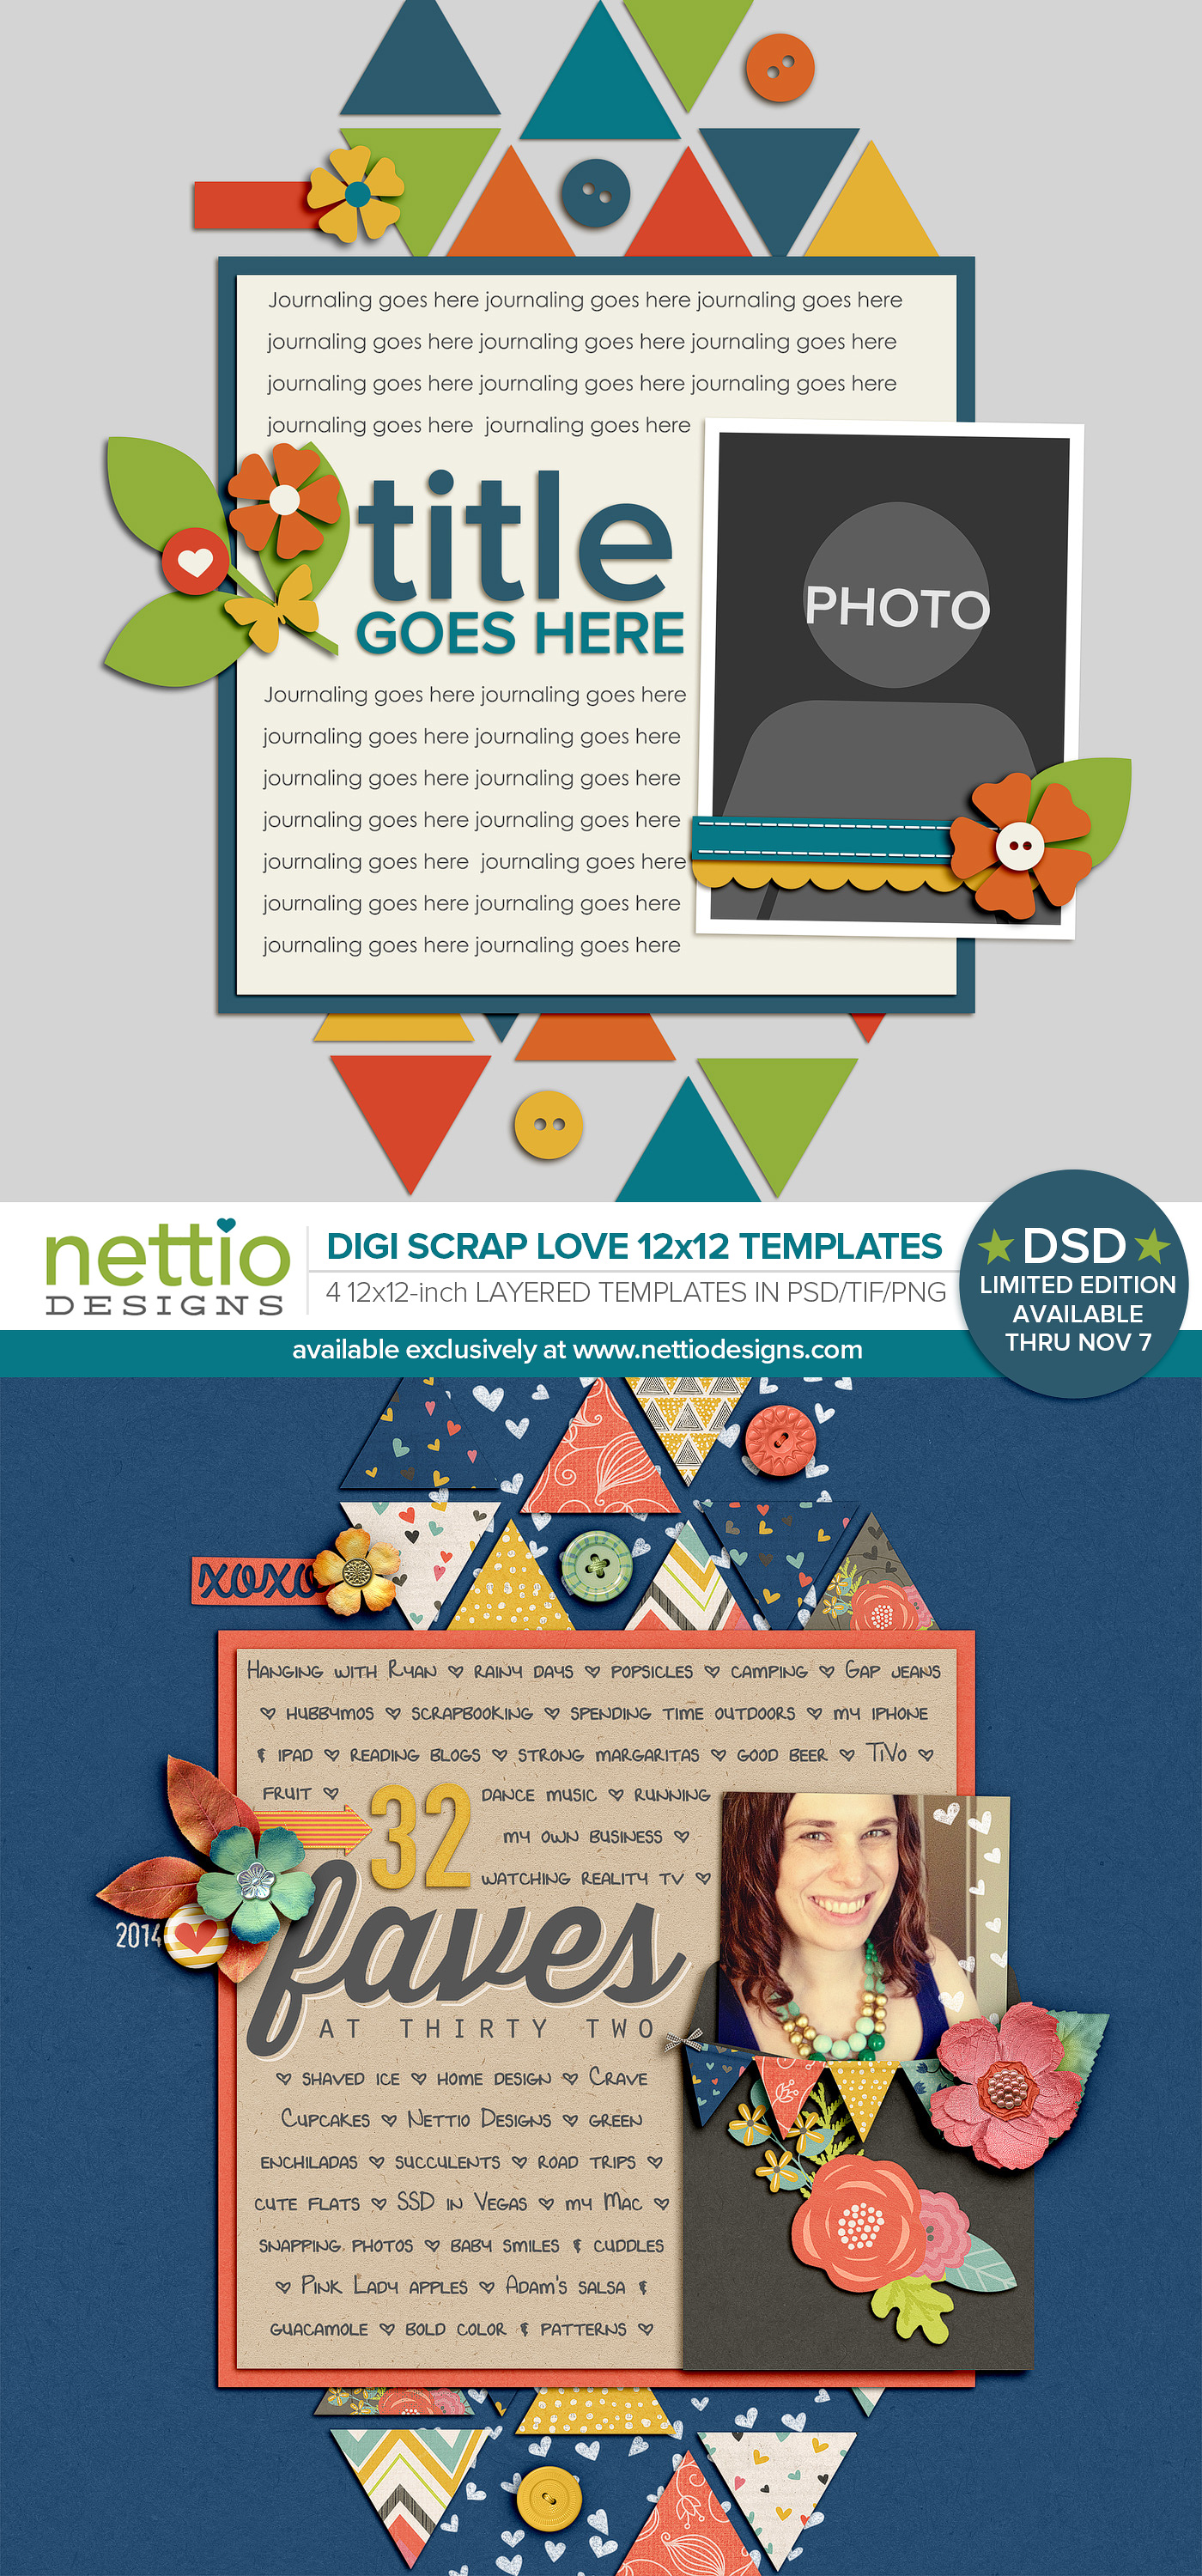 nettio designs digital scrapbooking template layout 3